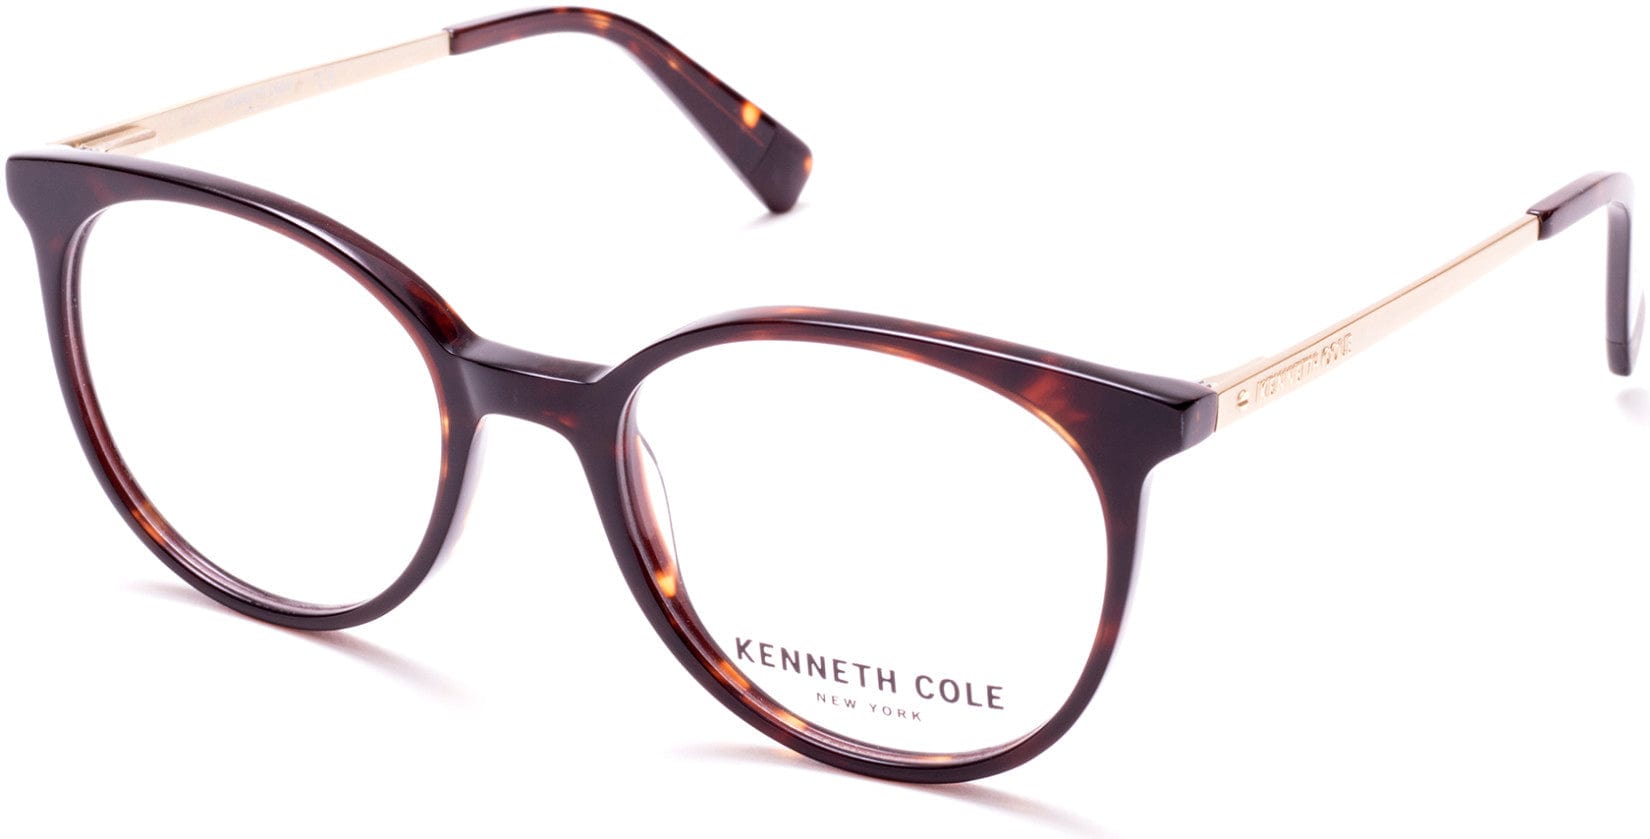 Kenneth Cole New York,Kenneth Cole Reaction KC0288 Round Eyeglasses 052-052 - Dark Havana